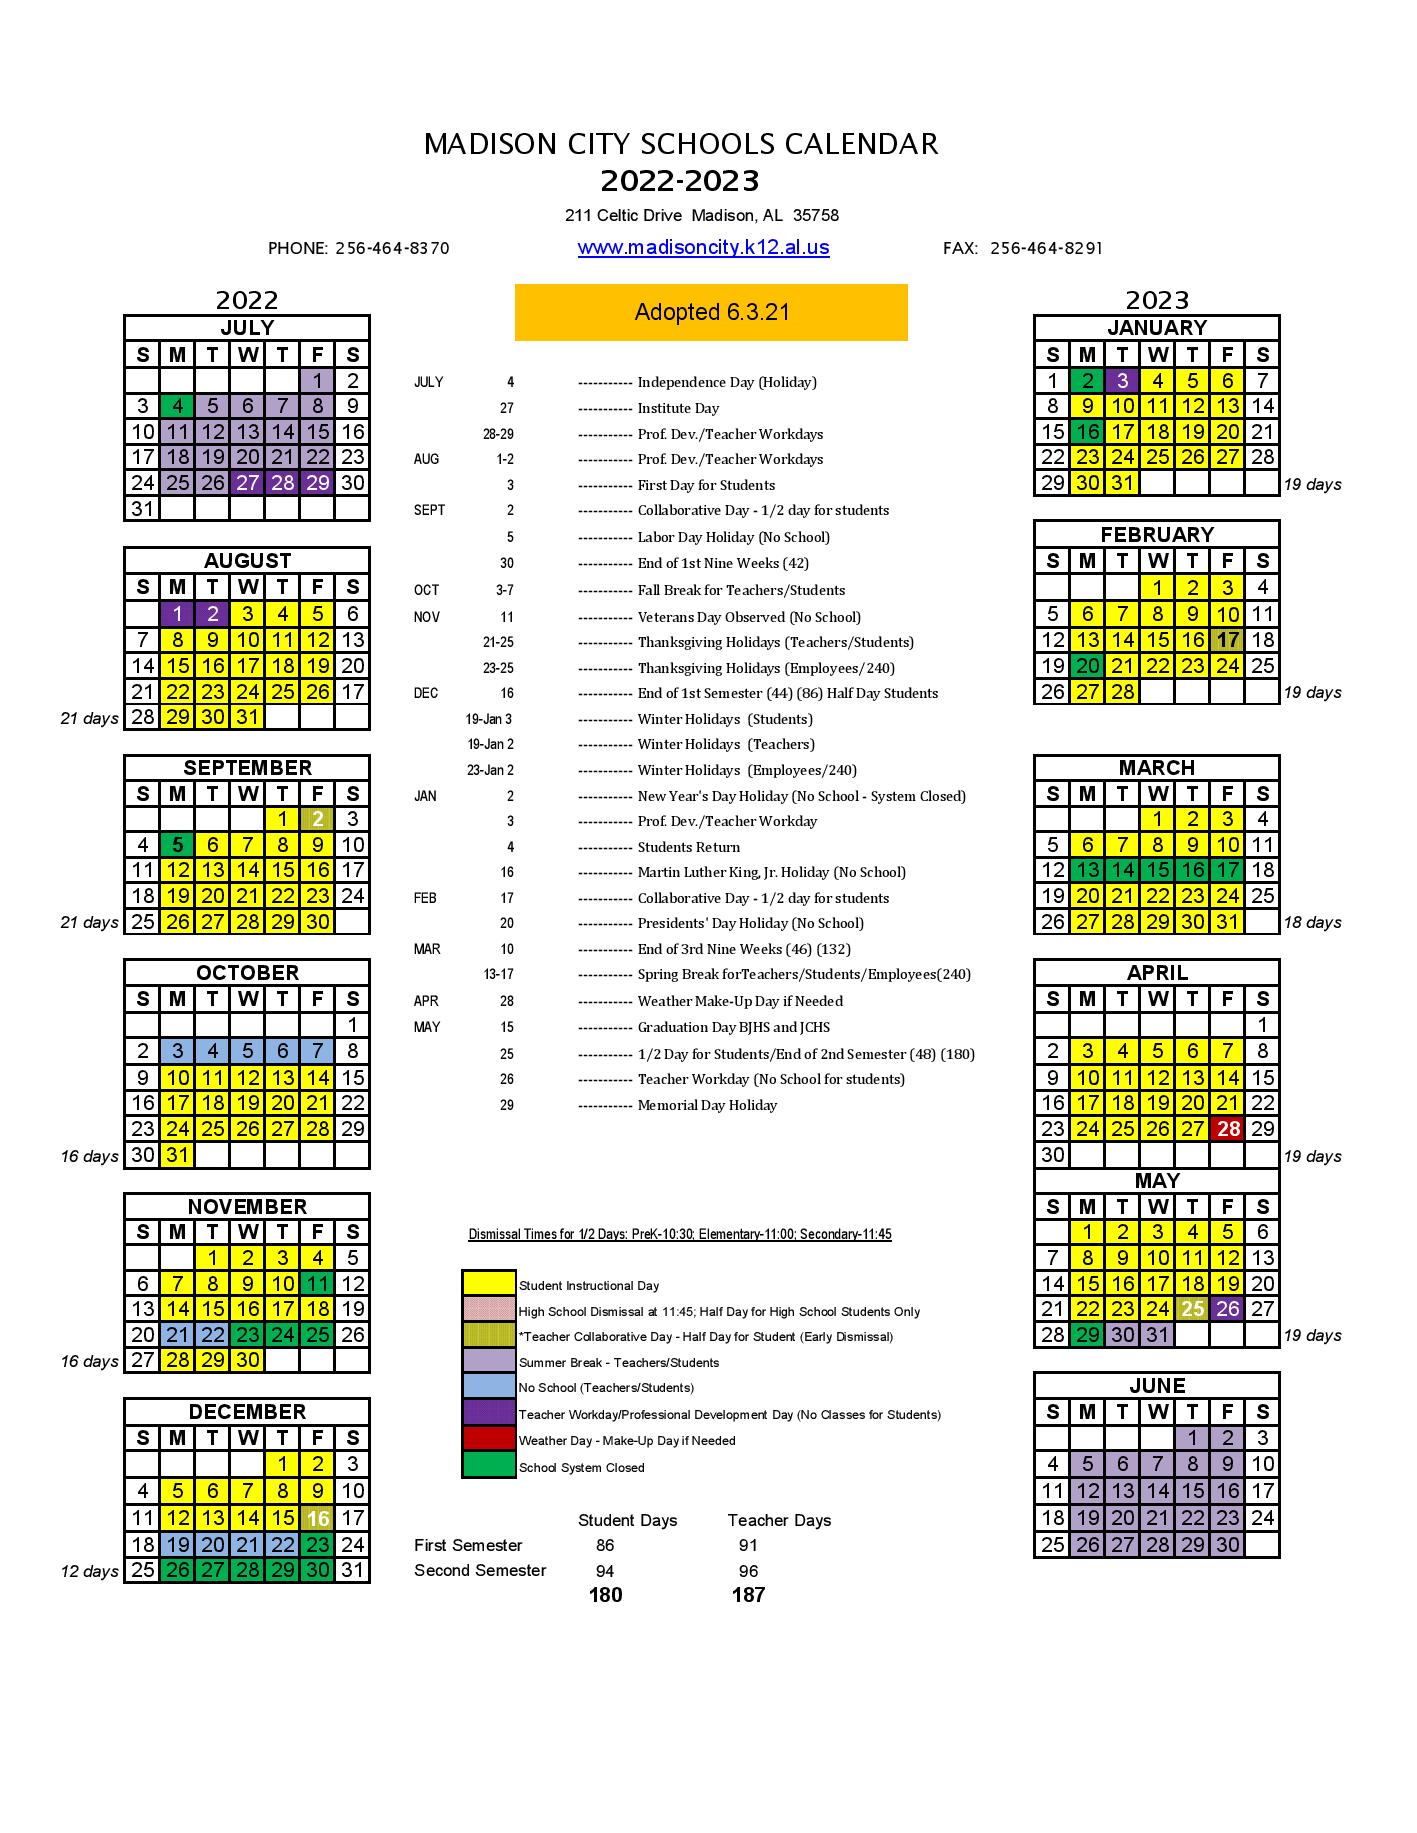 madison-city-schools-calendar-2022-2023-in-pdf